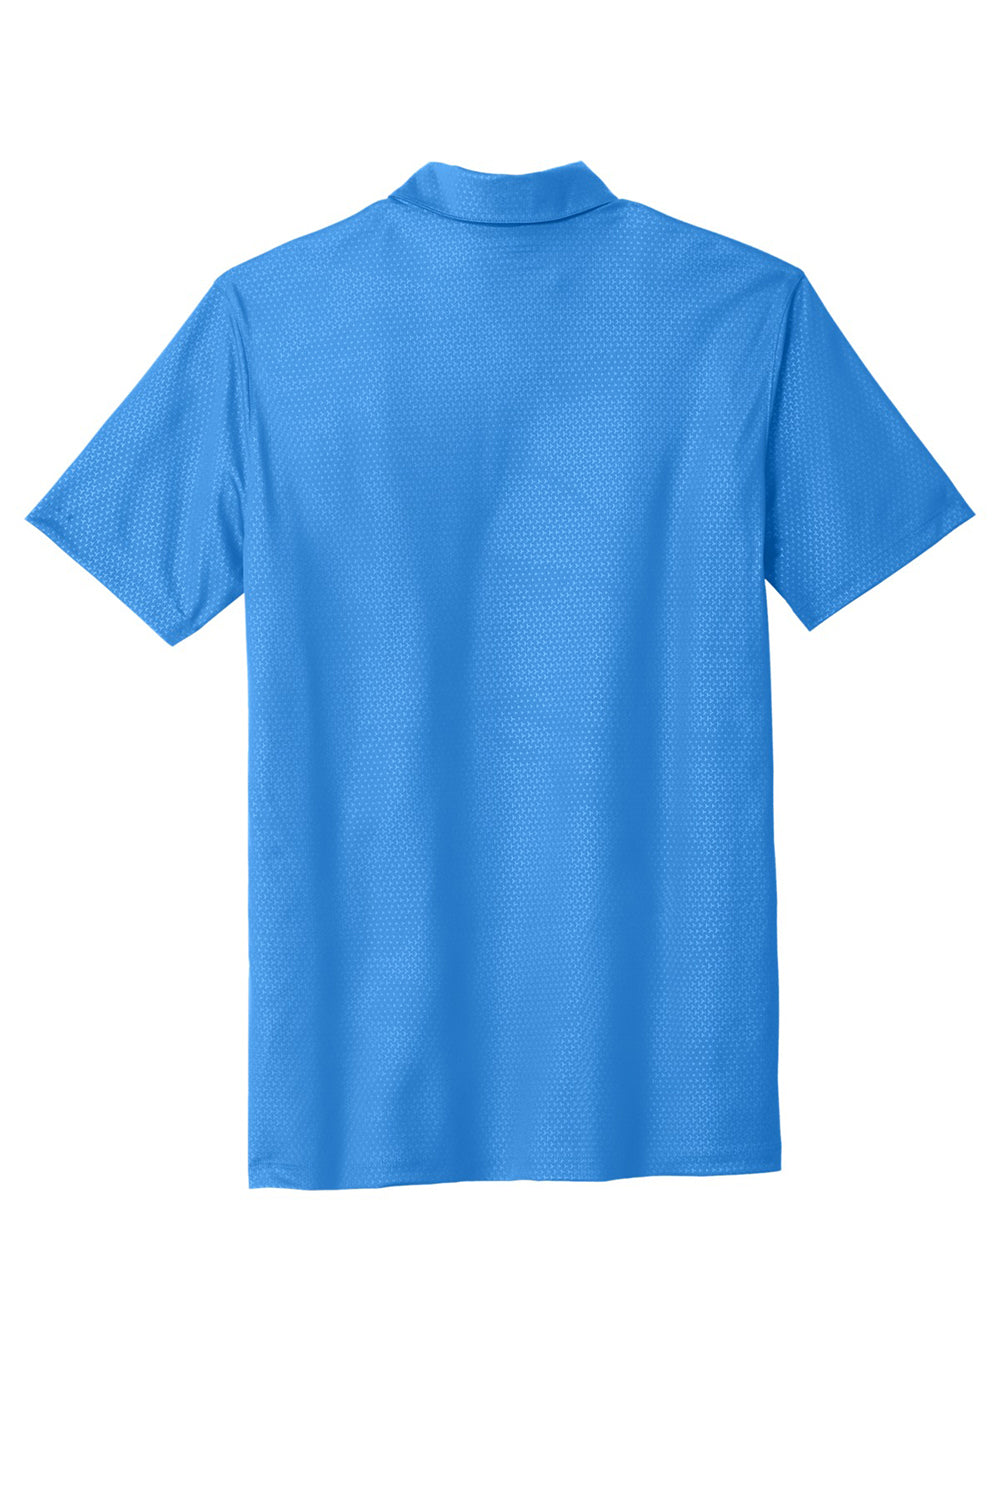 Nike 838964 Mens Dri-Fit Moisture Wicking Short Sleeve Polo Shirt Brisk Blue Flat Back